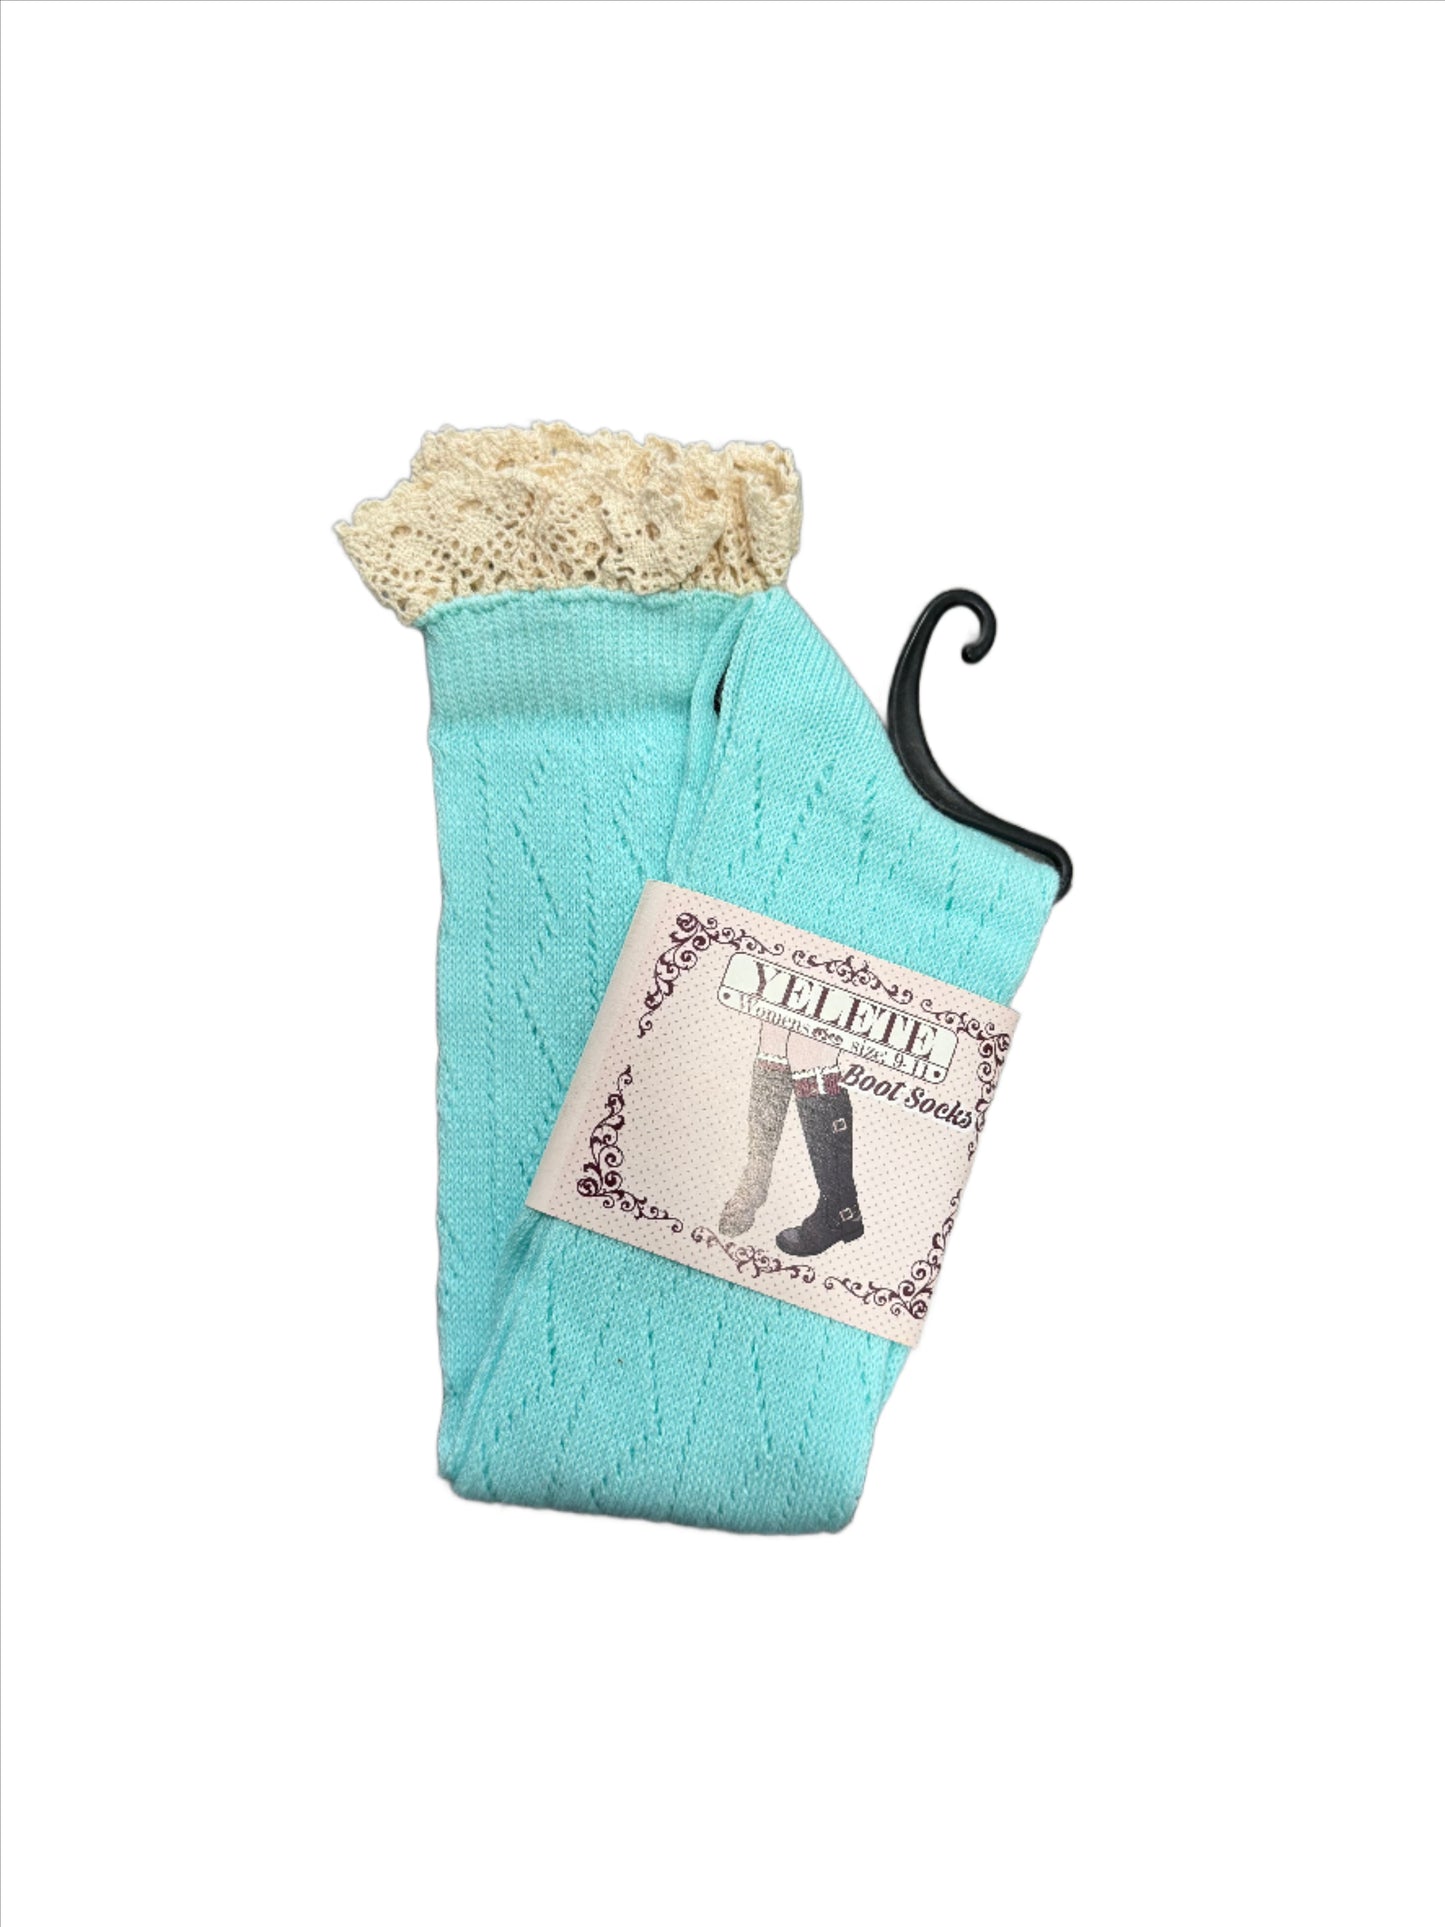 Ric-Rack Knit Knee High Cotton Socks